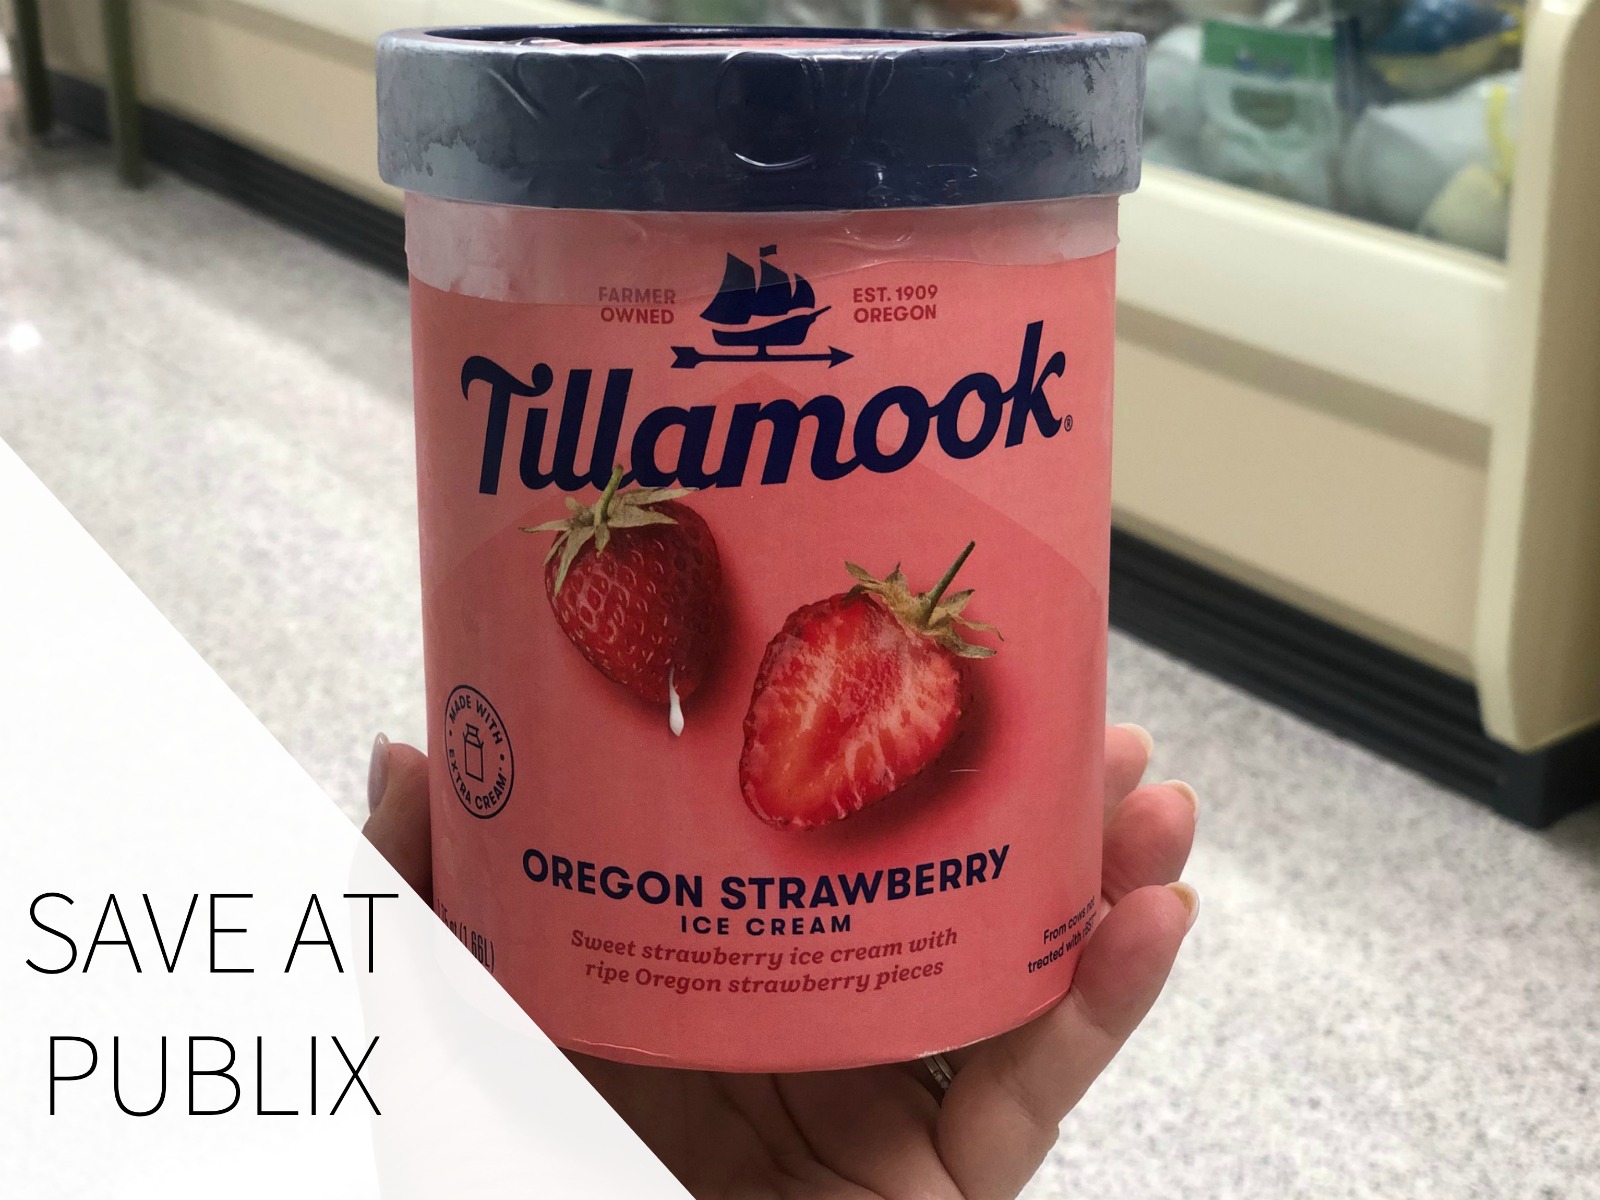 Enjoy The Rich, Creamy Taste Of Tillamook Ice Cream & Save Now At Publix